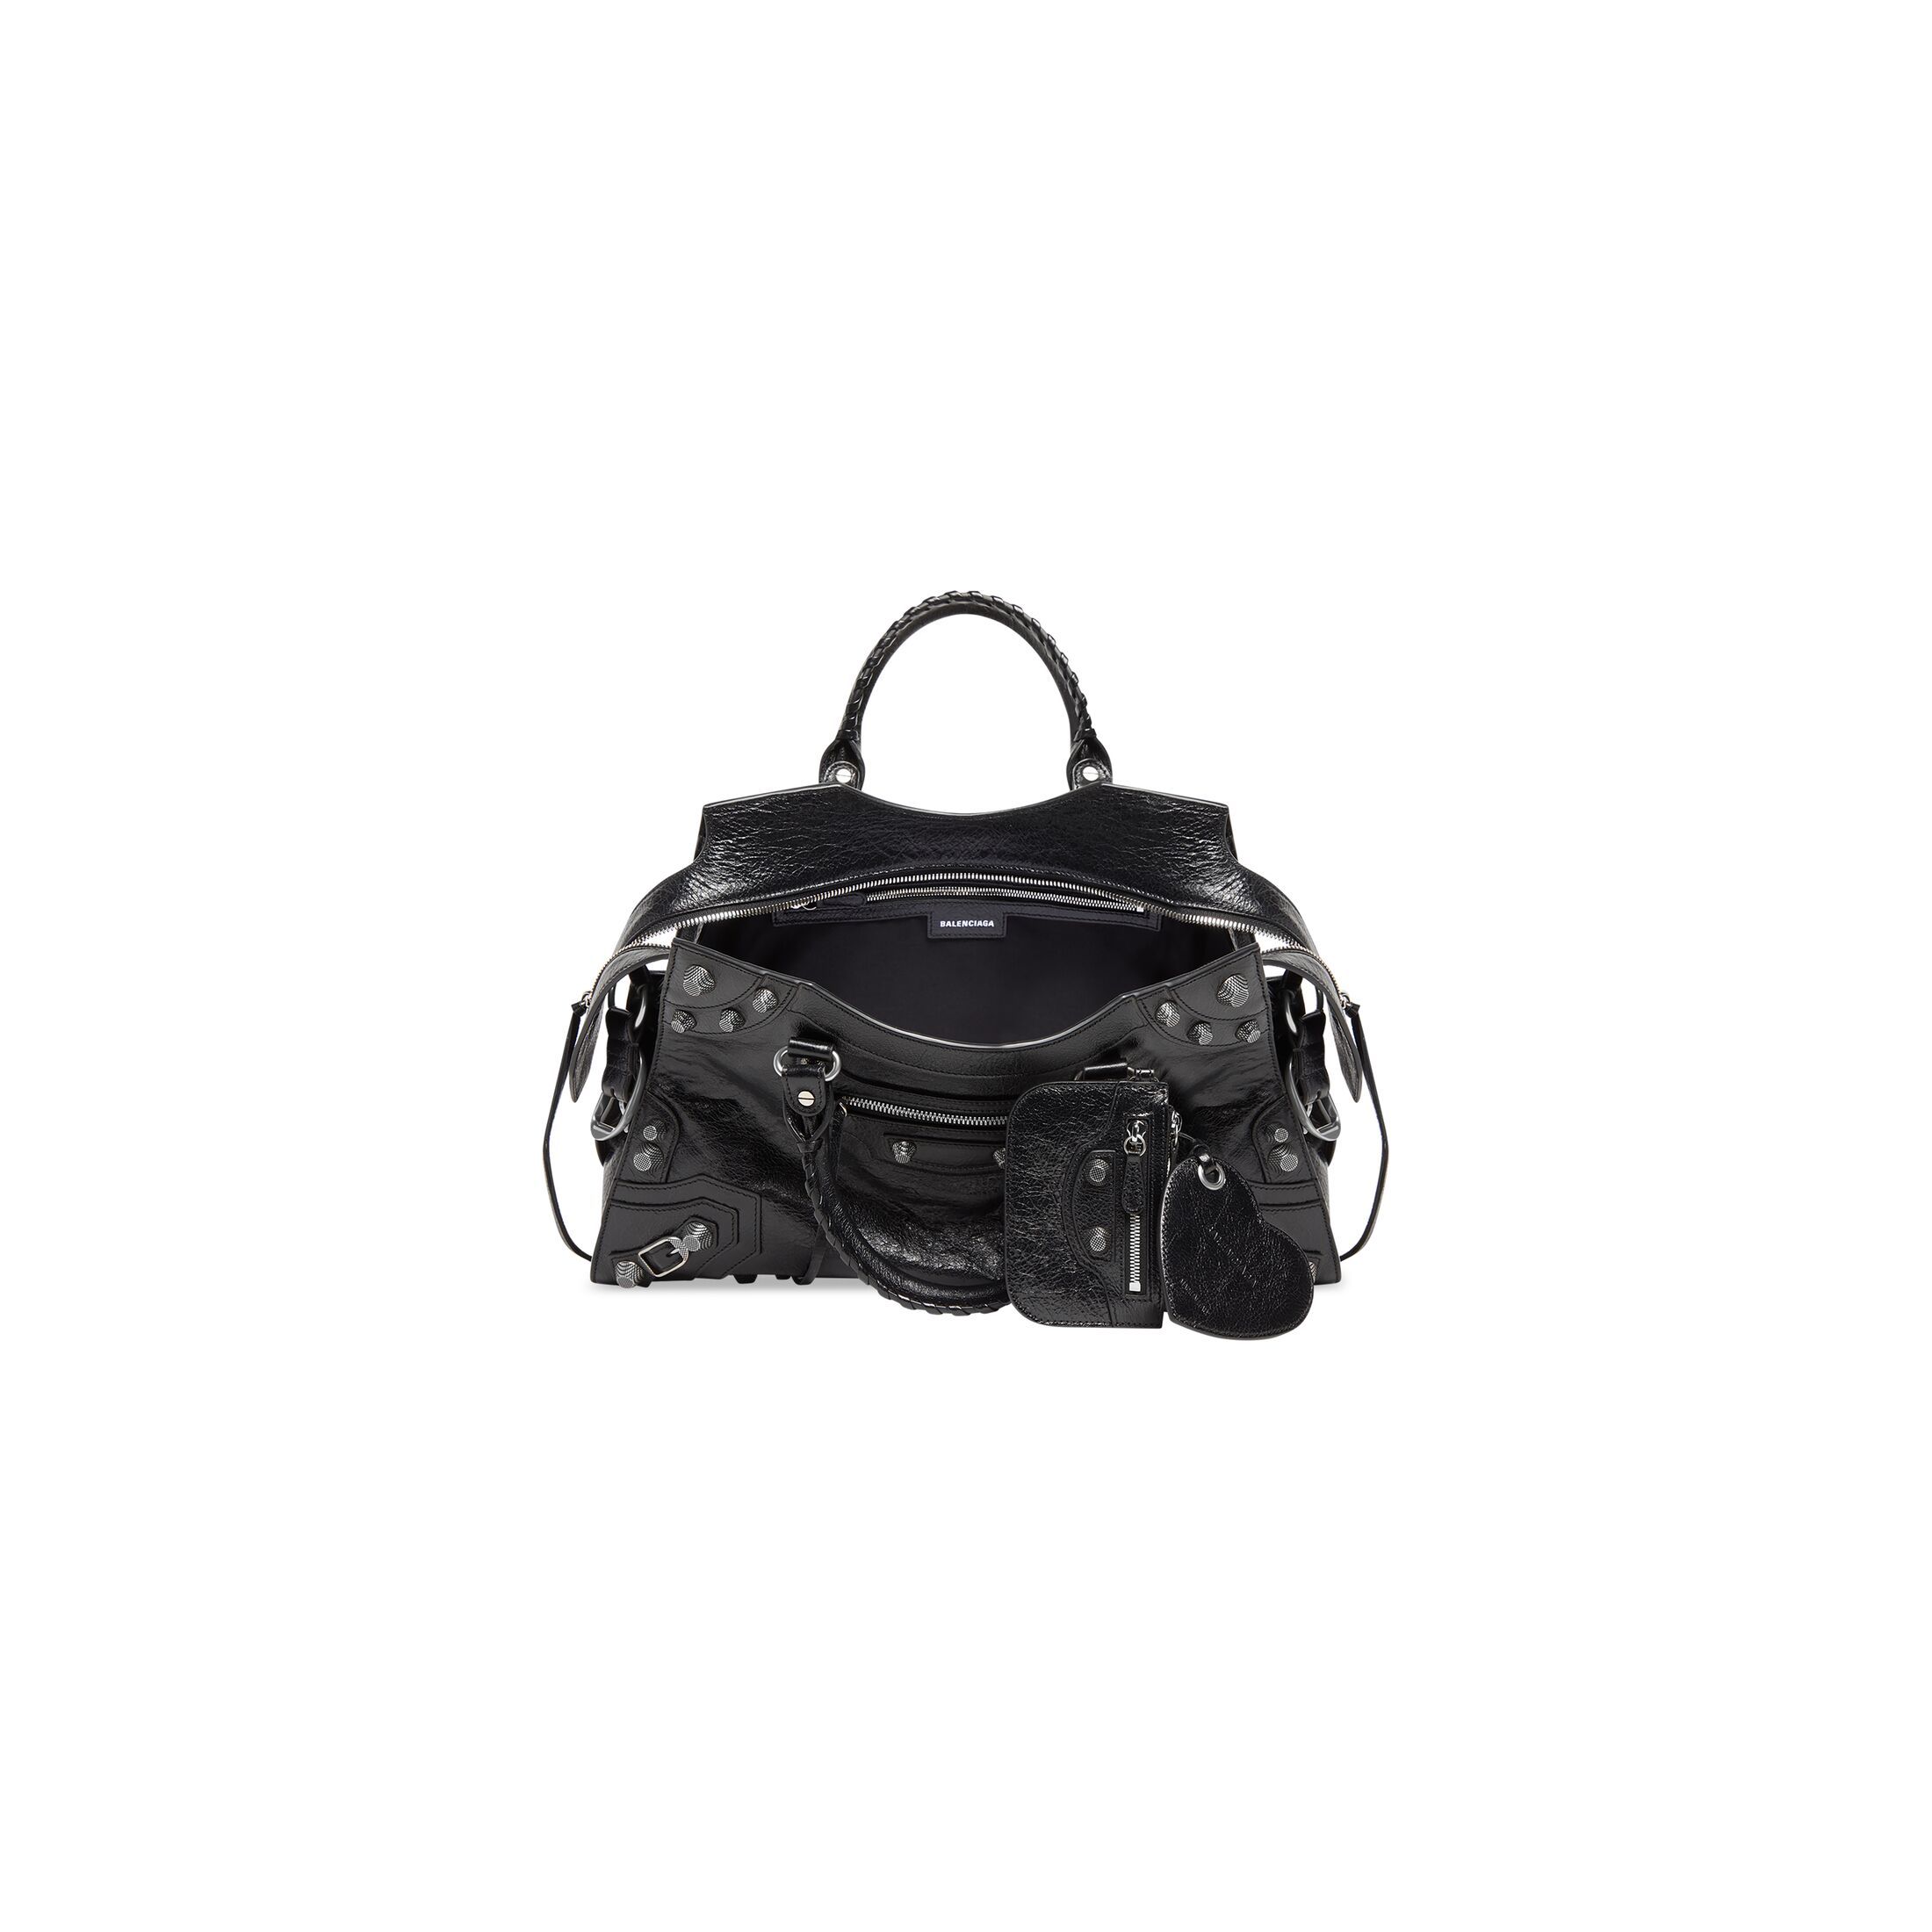 Neo Cagole City Handbag in black Arena Lambskin, aged-silver hardware | Balenciaga